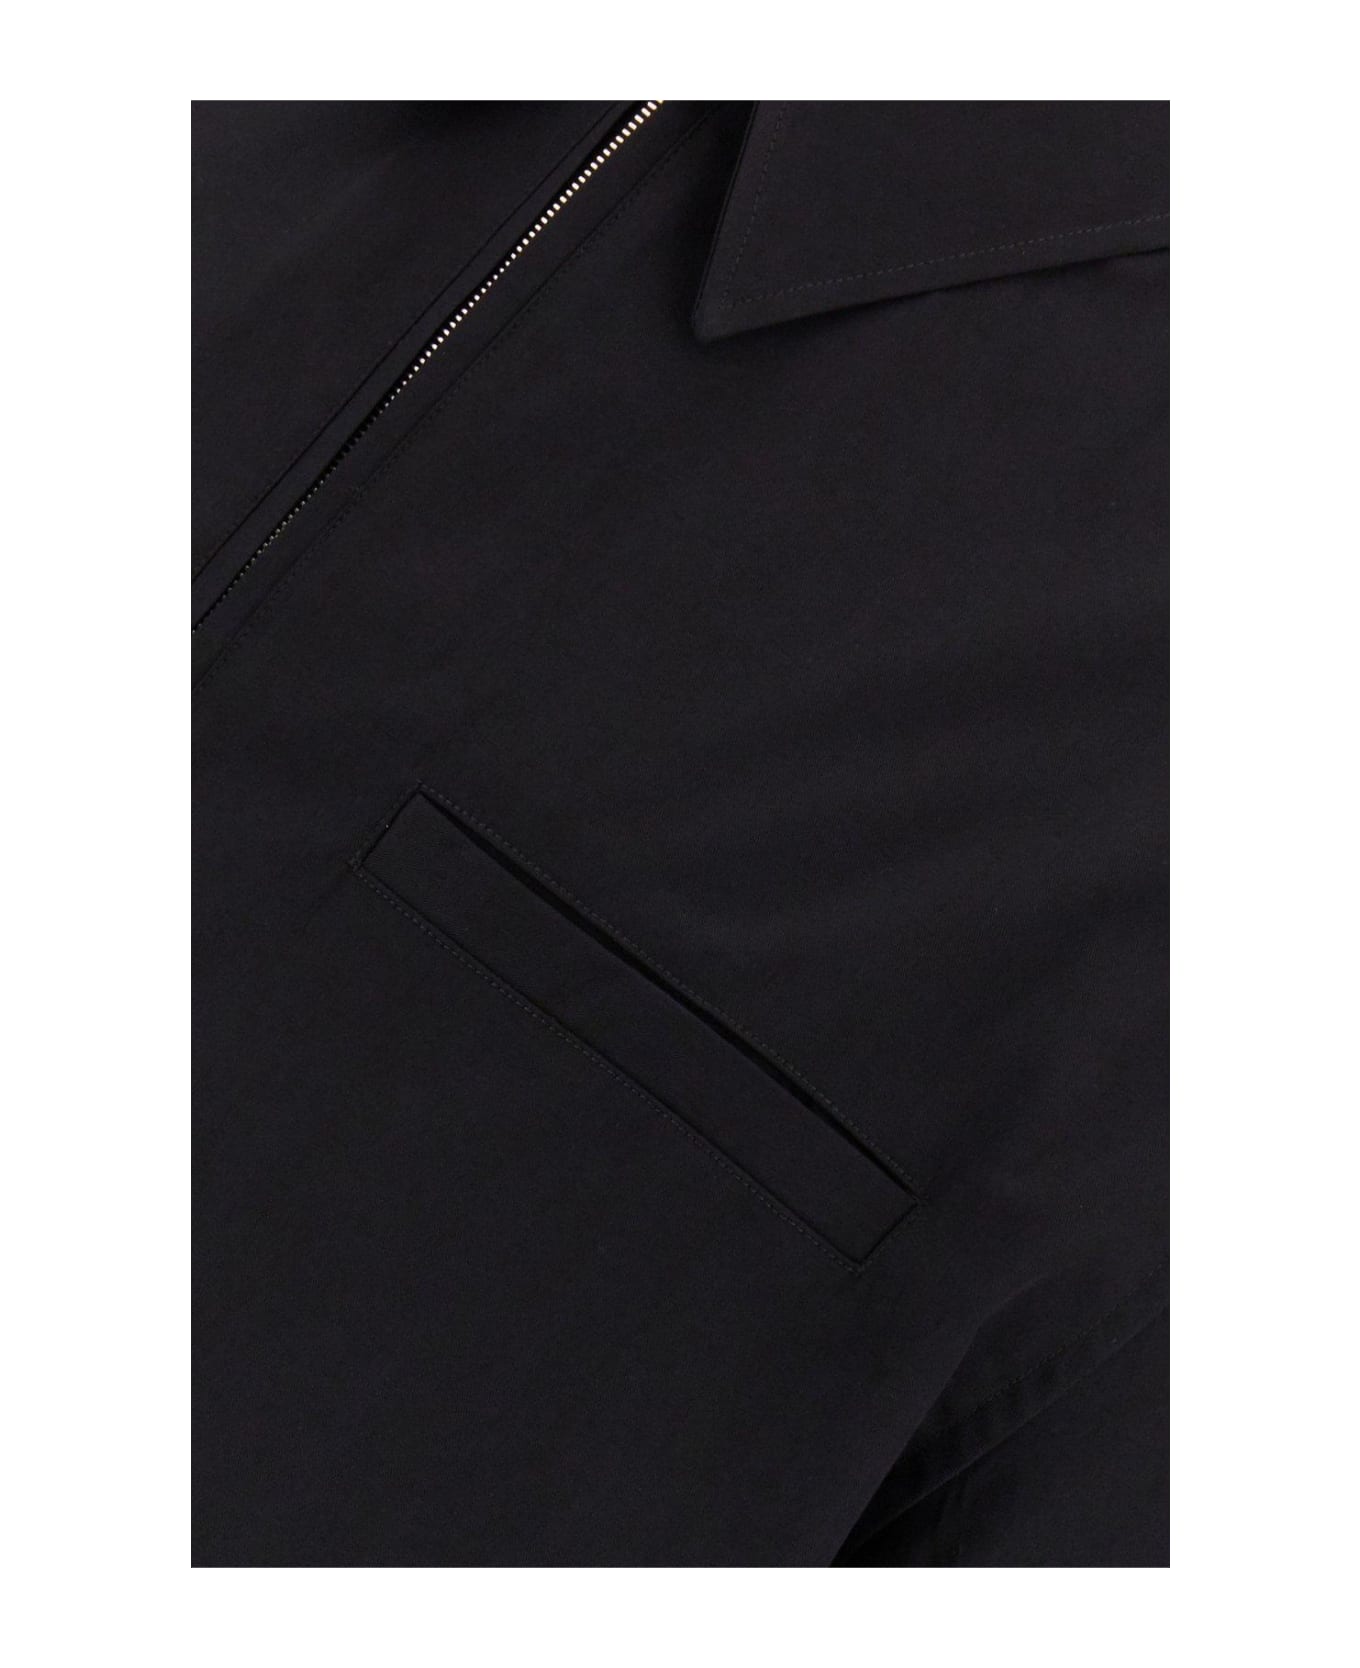 Givenchy Zipped Short-sleeved Shirt